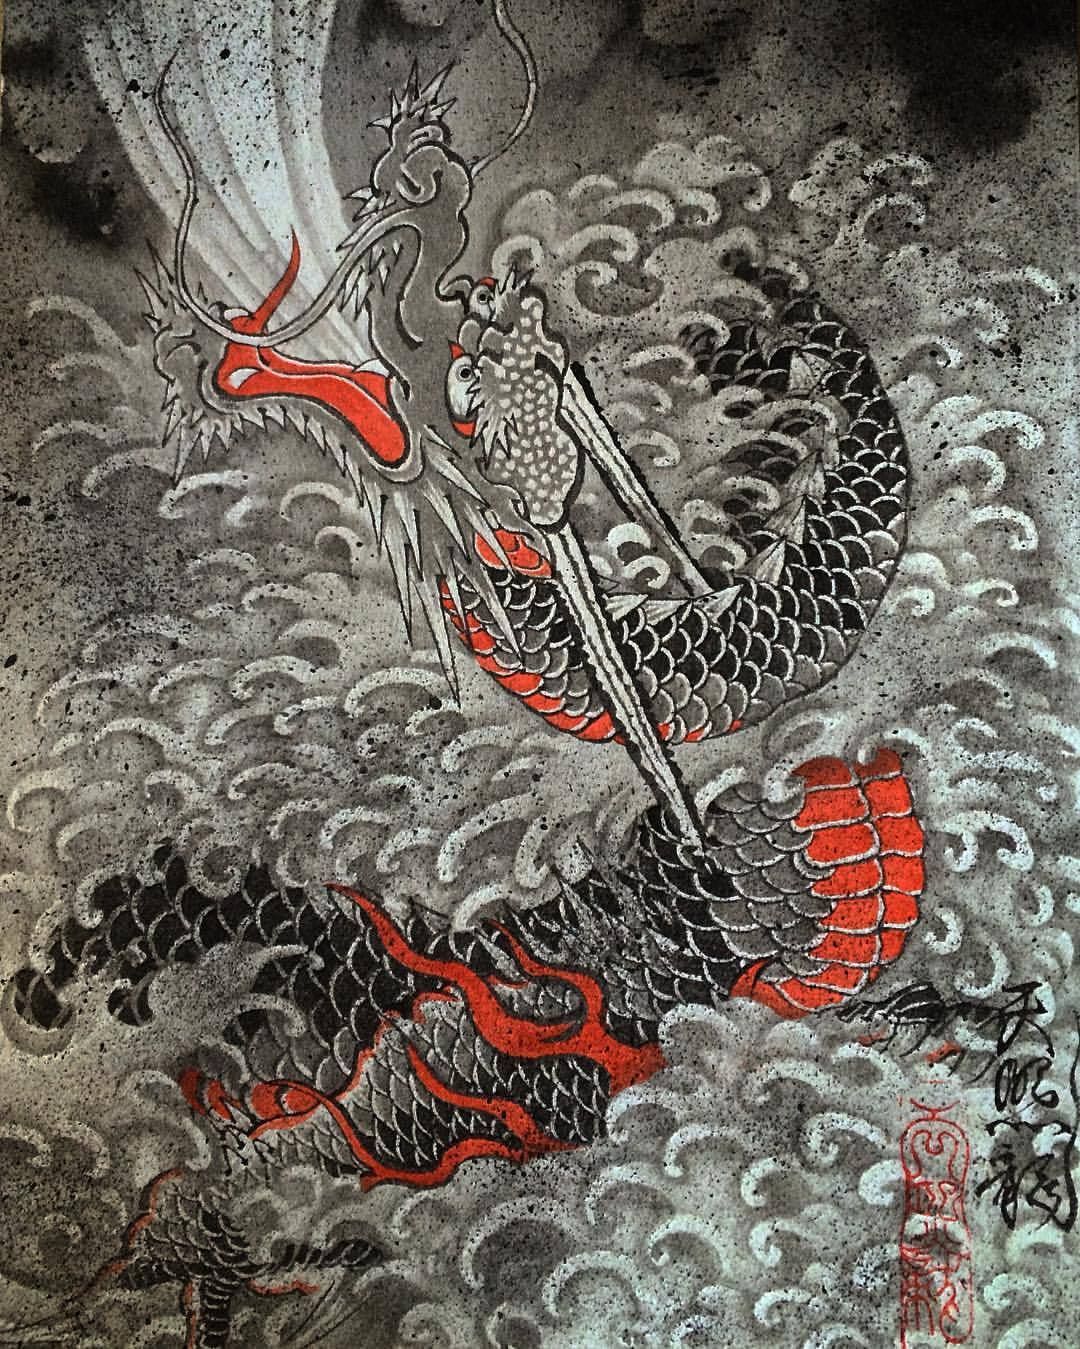 Tenkiryu Irezumi: “ あと１つ Drawing Of Dragon With Waves #drawing #dragon #ryu #tebori #handpoke #irezumi #ho. Japanese Illustration, Dragon Drawing, Japanese Tattoo